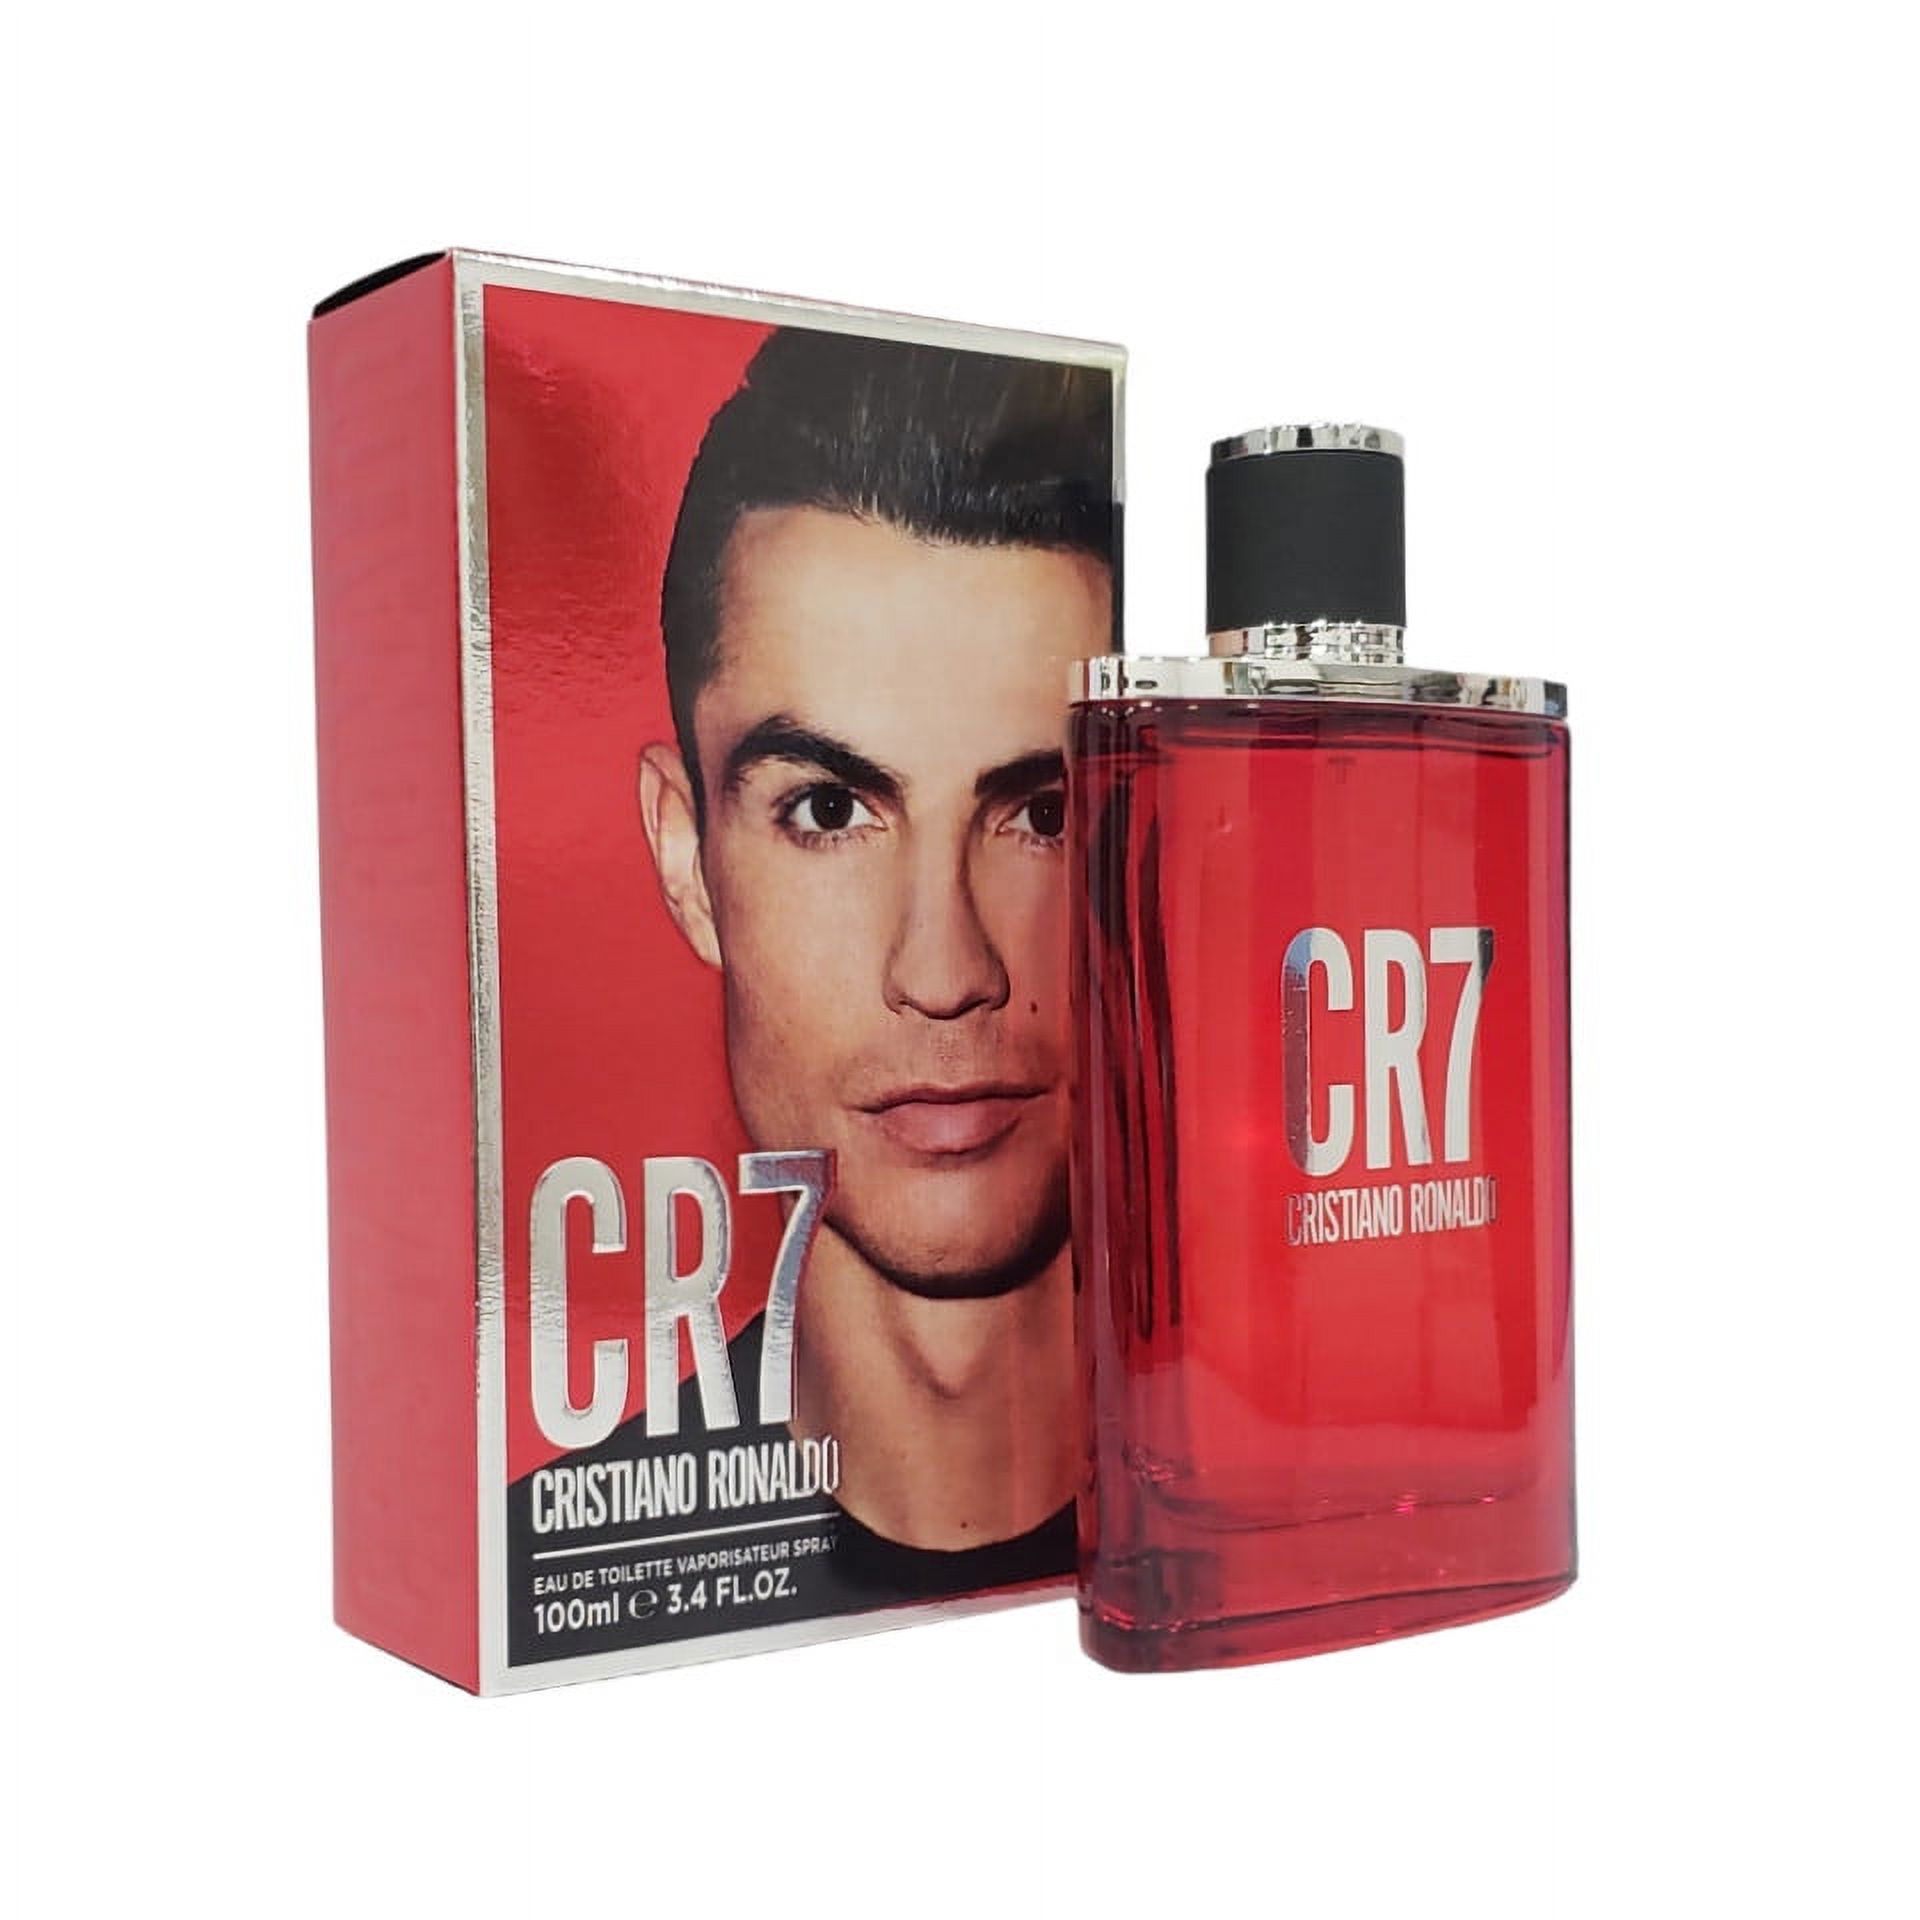 Cristiano Ronaldo Cr7 Cologne Eau De Toilette Spray 3.4 oz - image 3 of 5